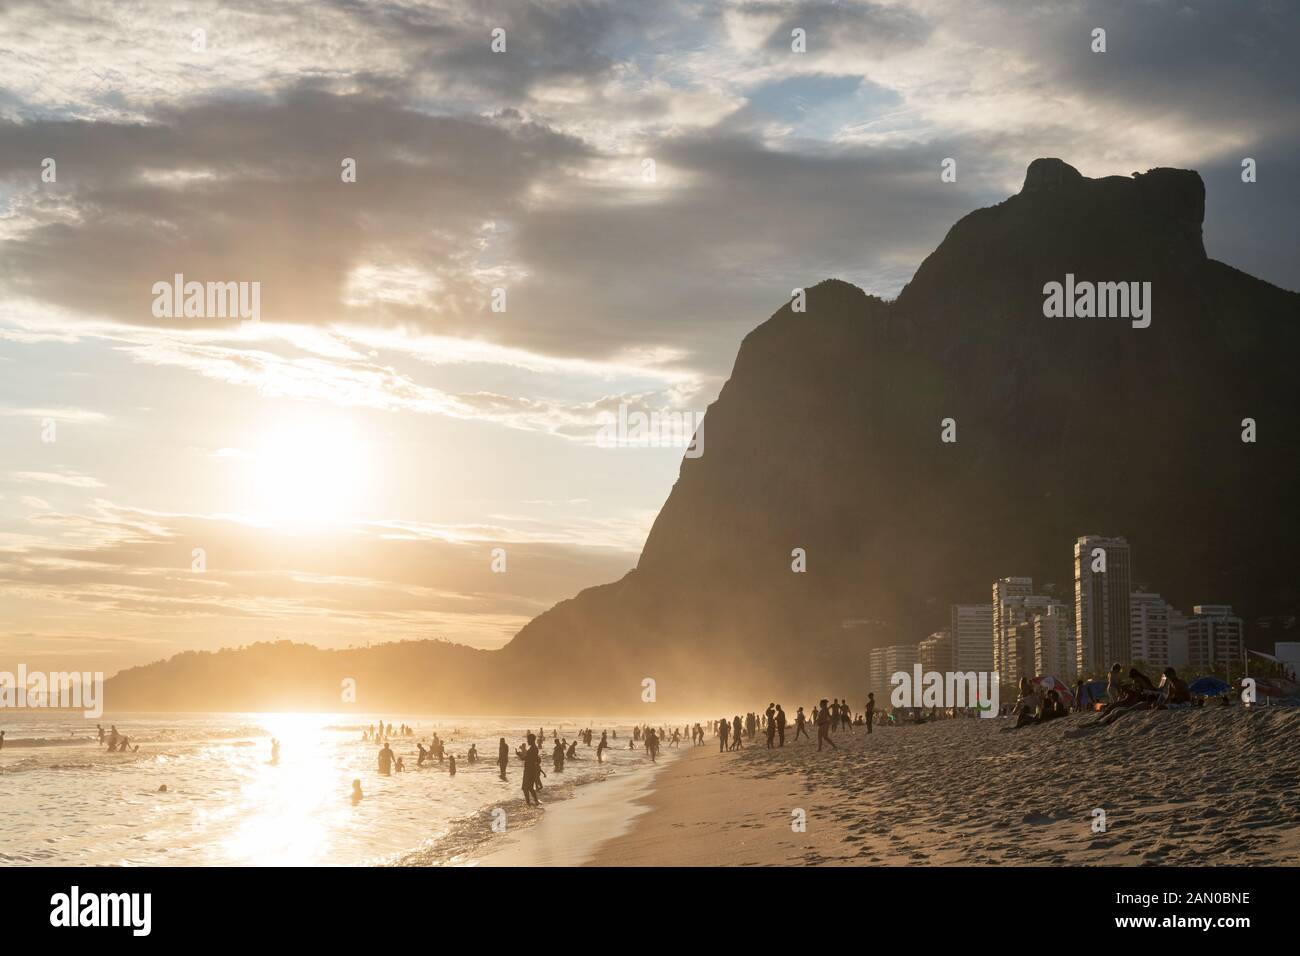 Coucher de soleil depuis la plage de Sao Conrado à Rio de Janeiro, avec la montagne de granit de mer Pedra da Gavea. Banque D'Images